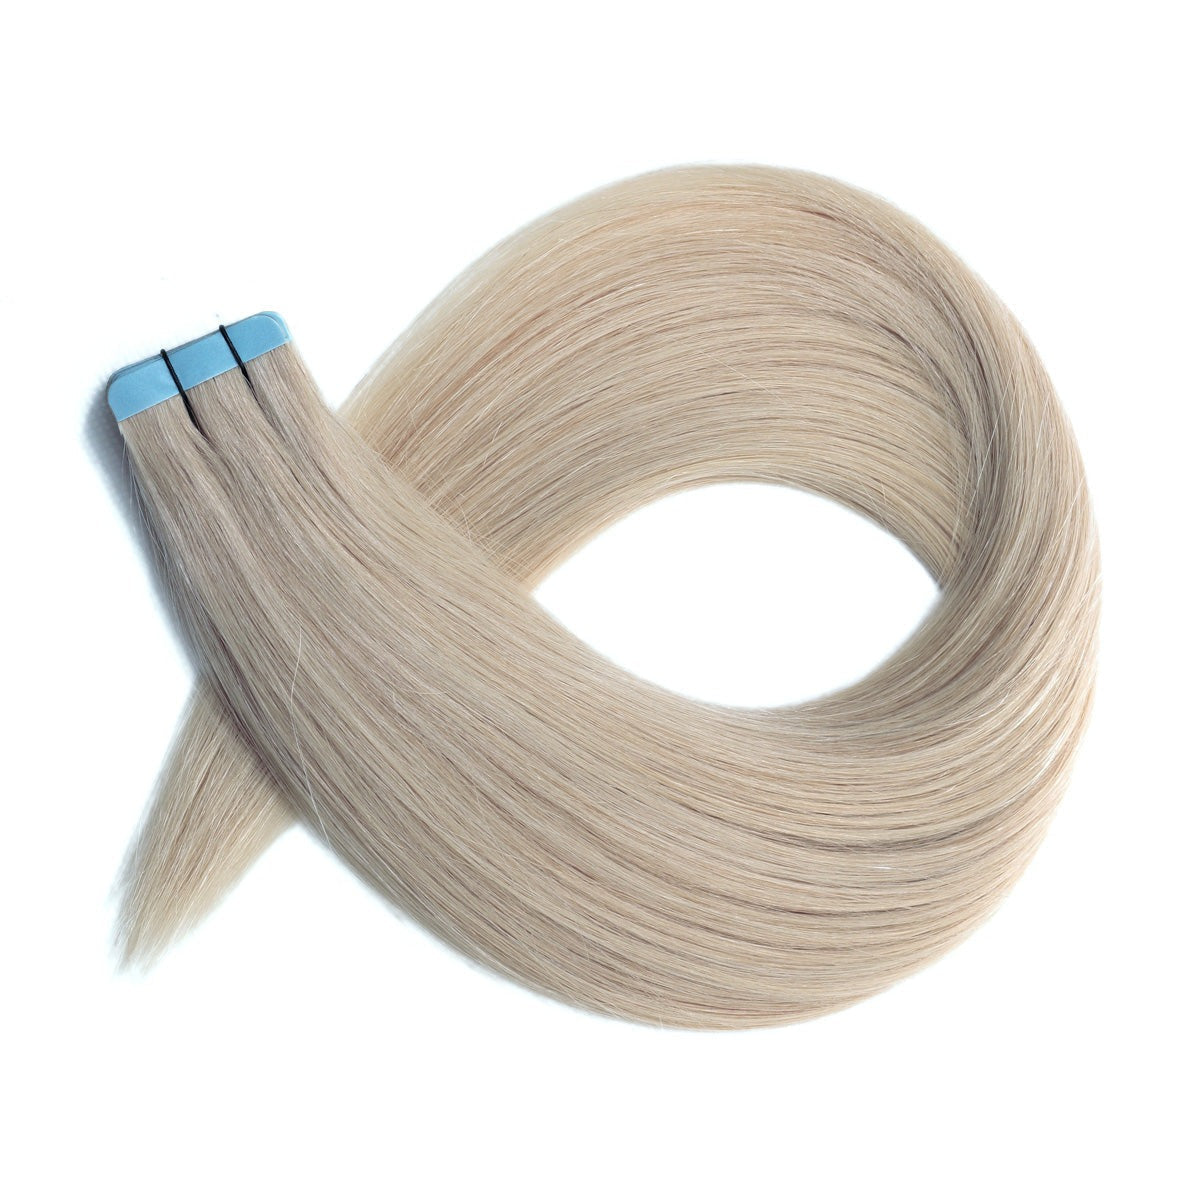 Sample Hair Extensions Colour Match #18a Ash Blonde